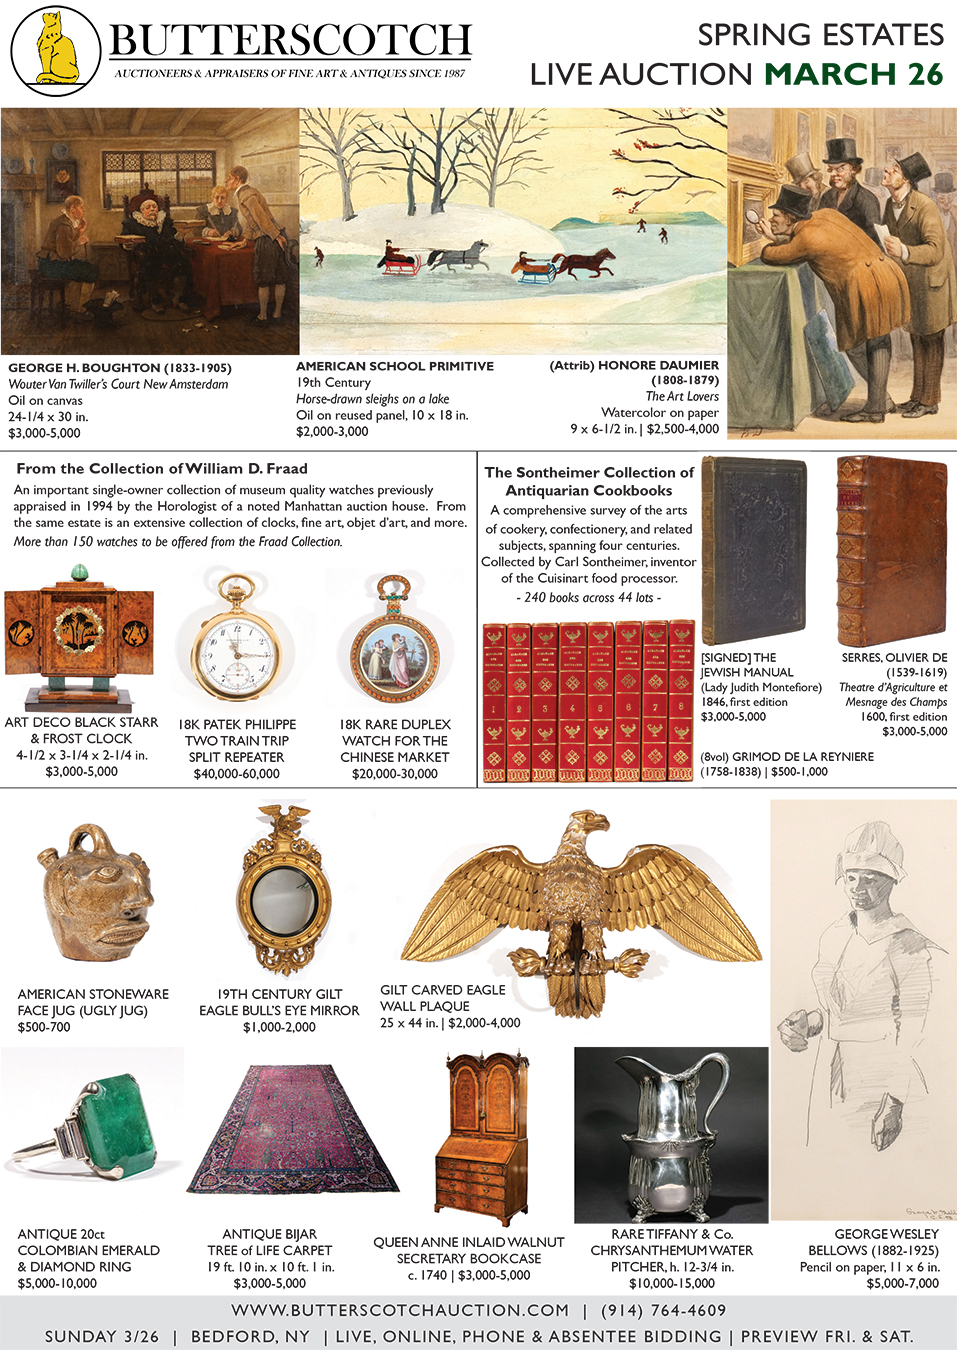 Butterscotch Auctioneers & Appraisers of Fine Art & Antiques since 1987